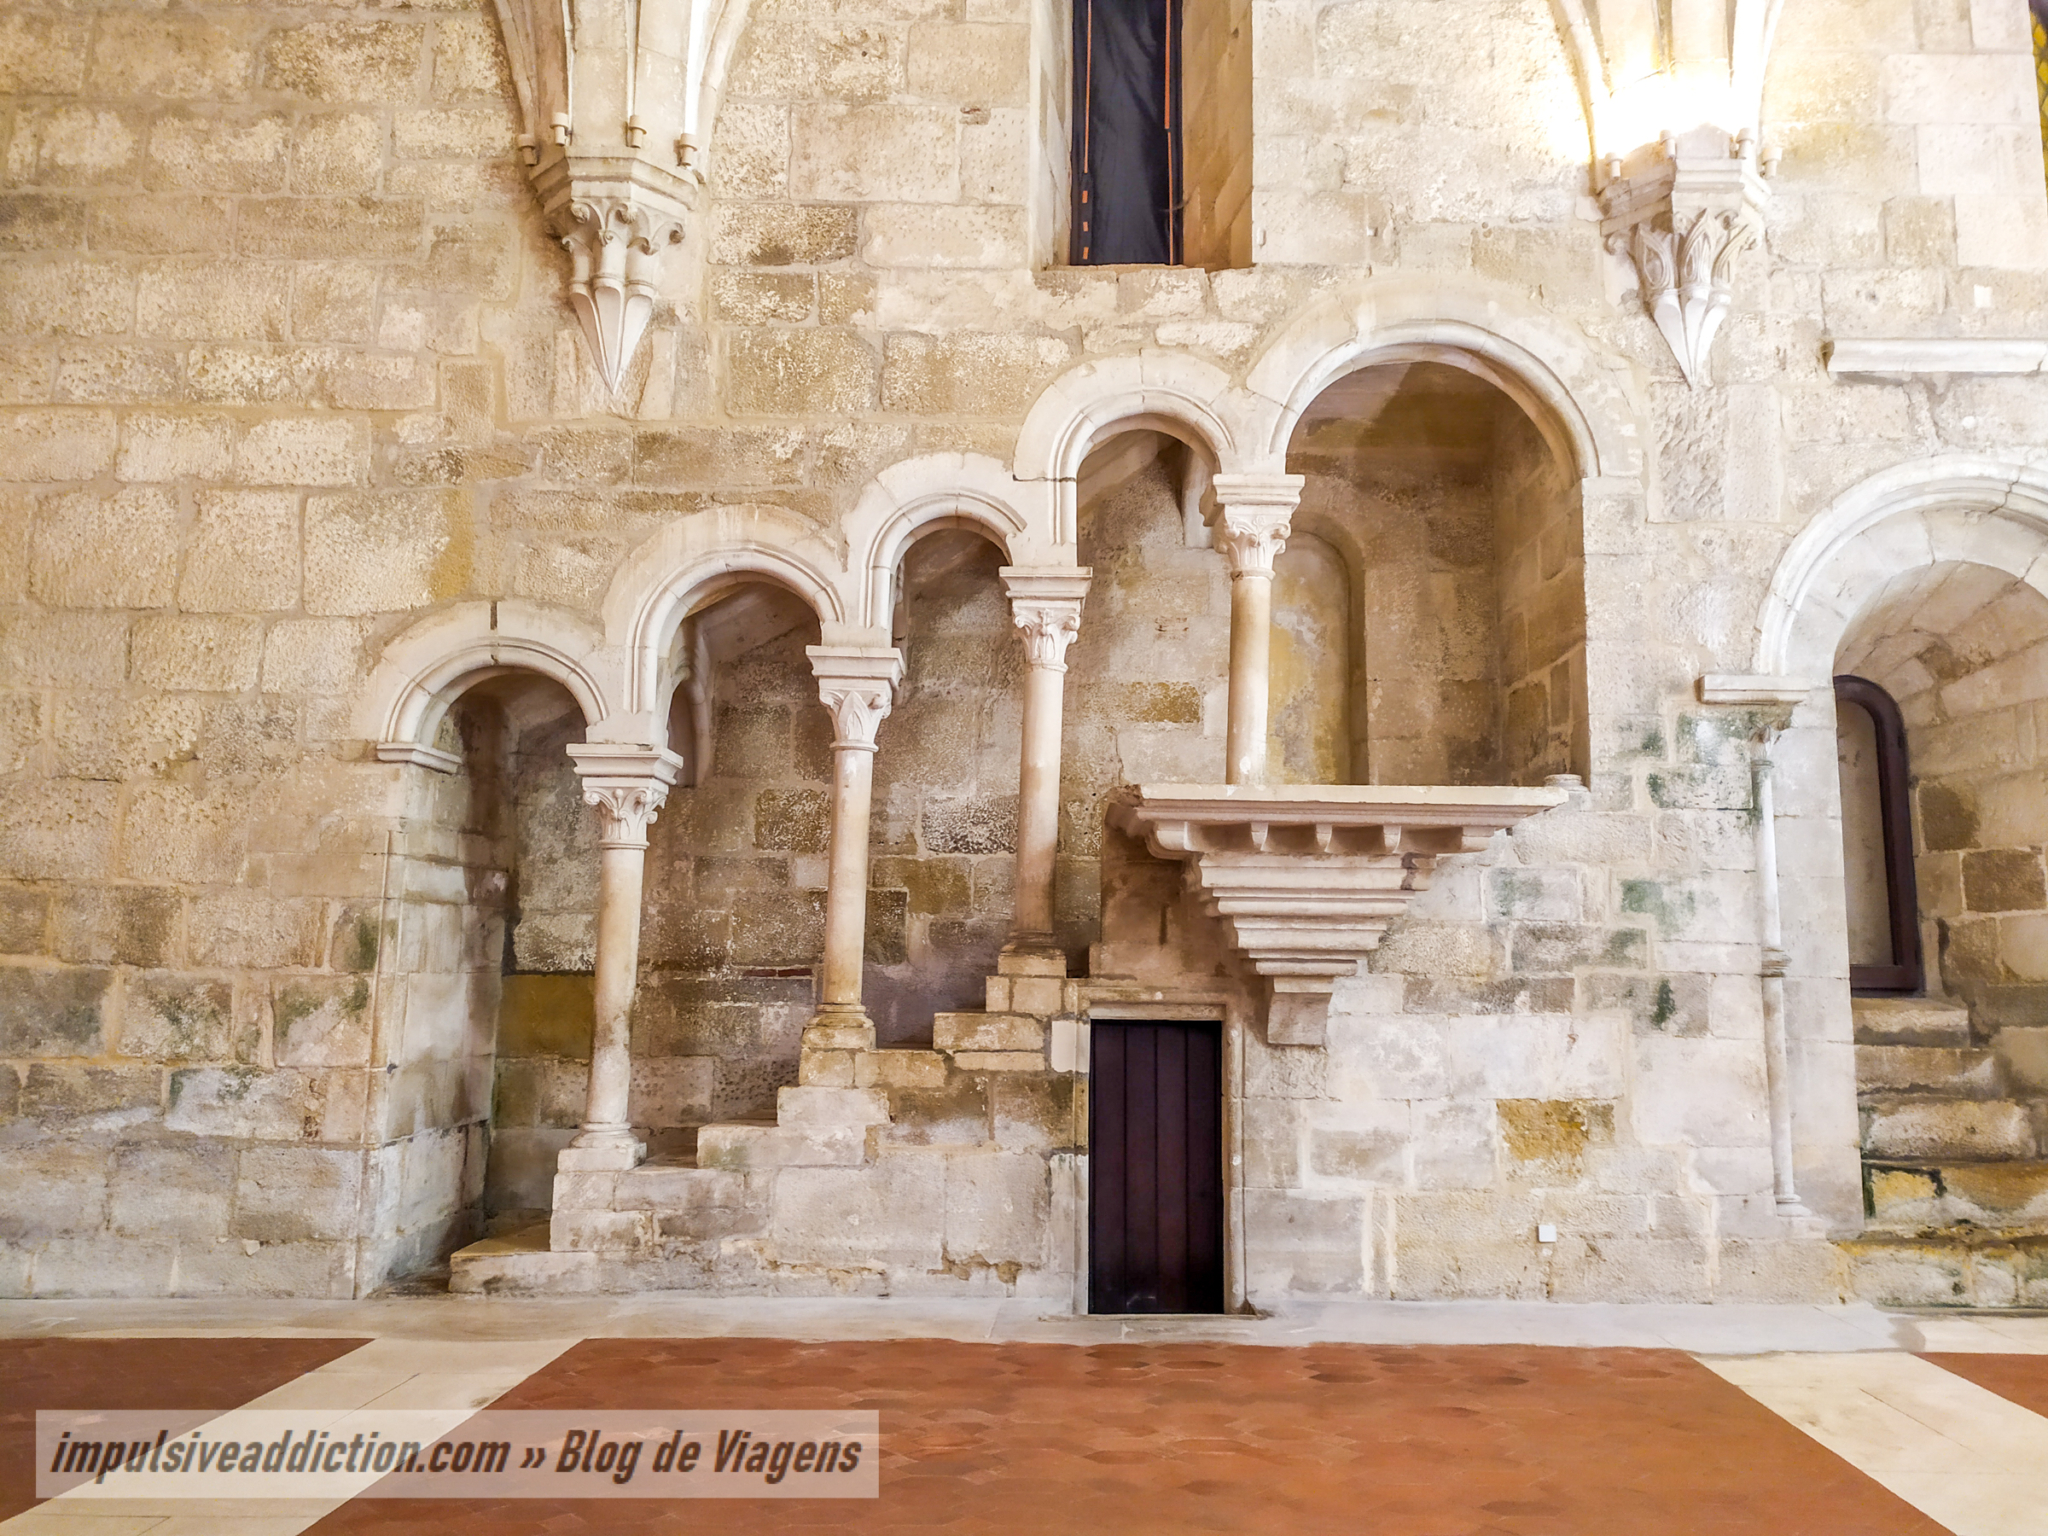 Inside the Monastery of Alcobaça